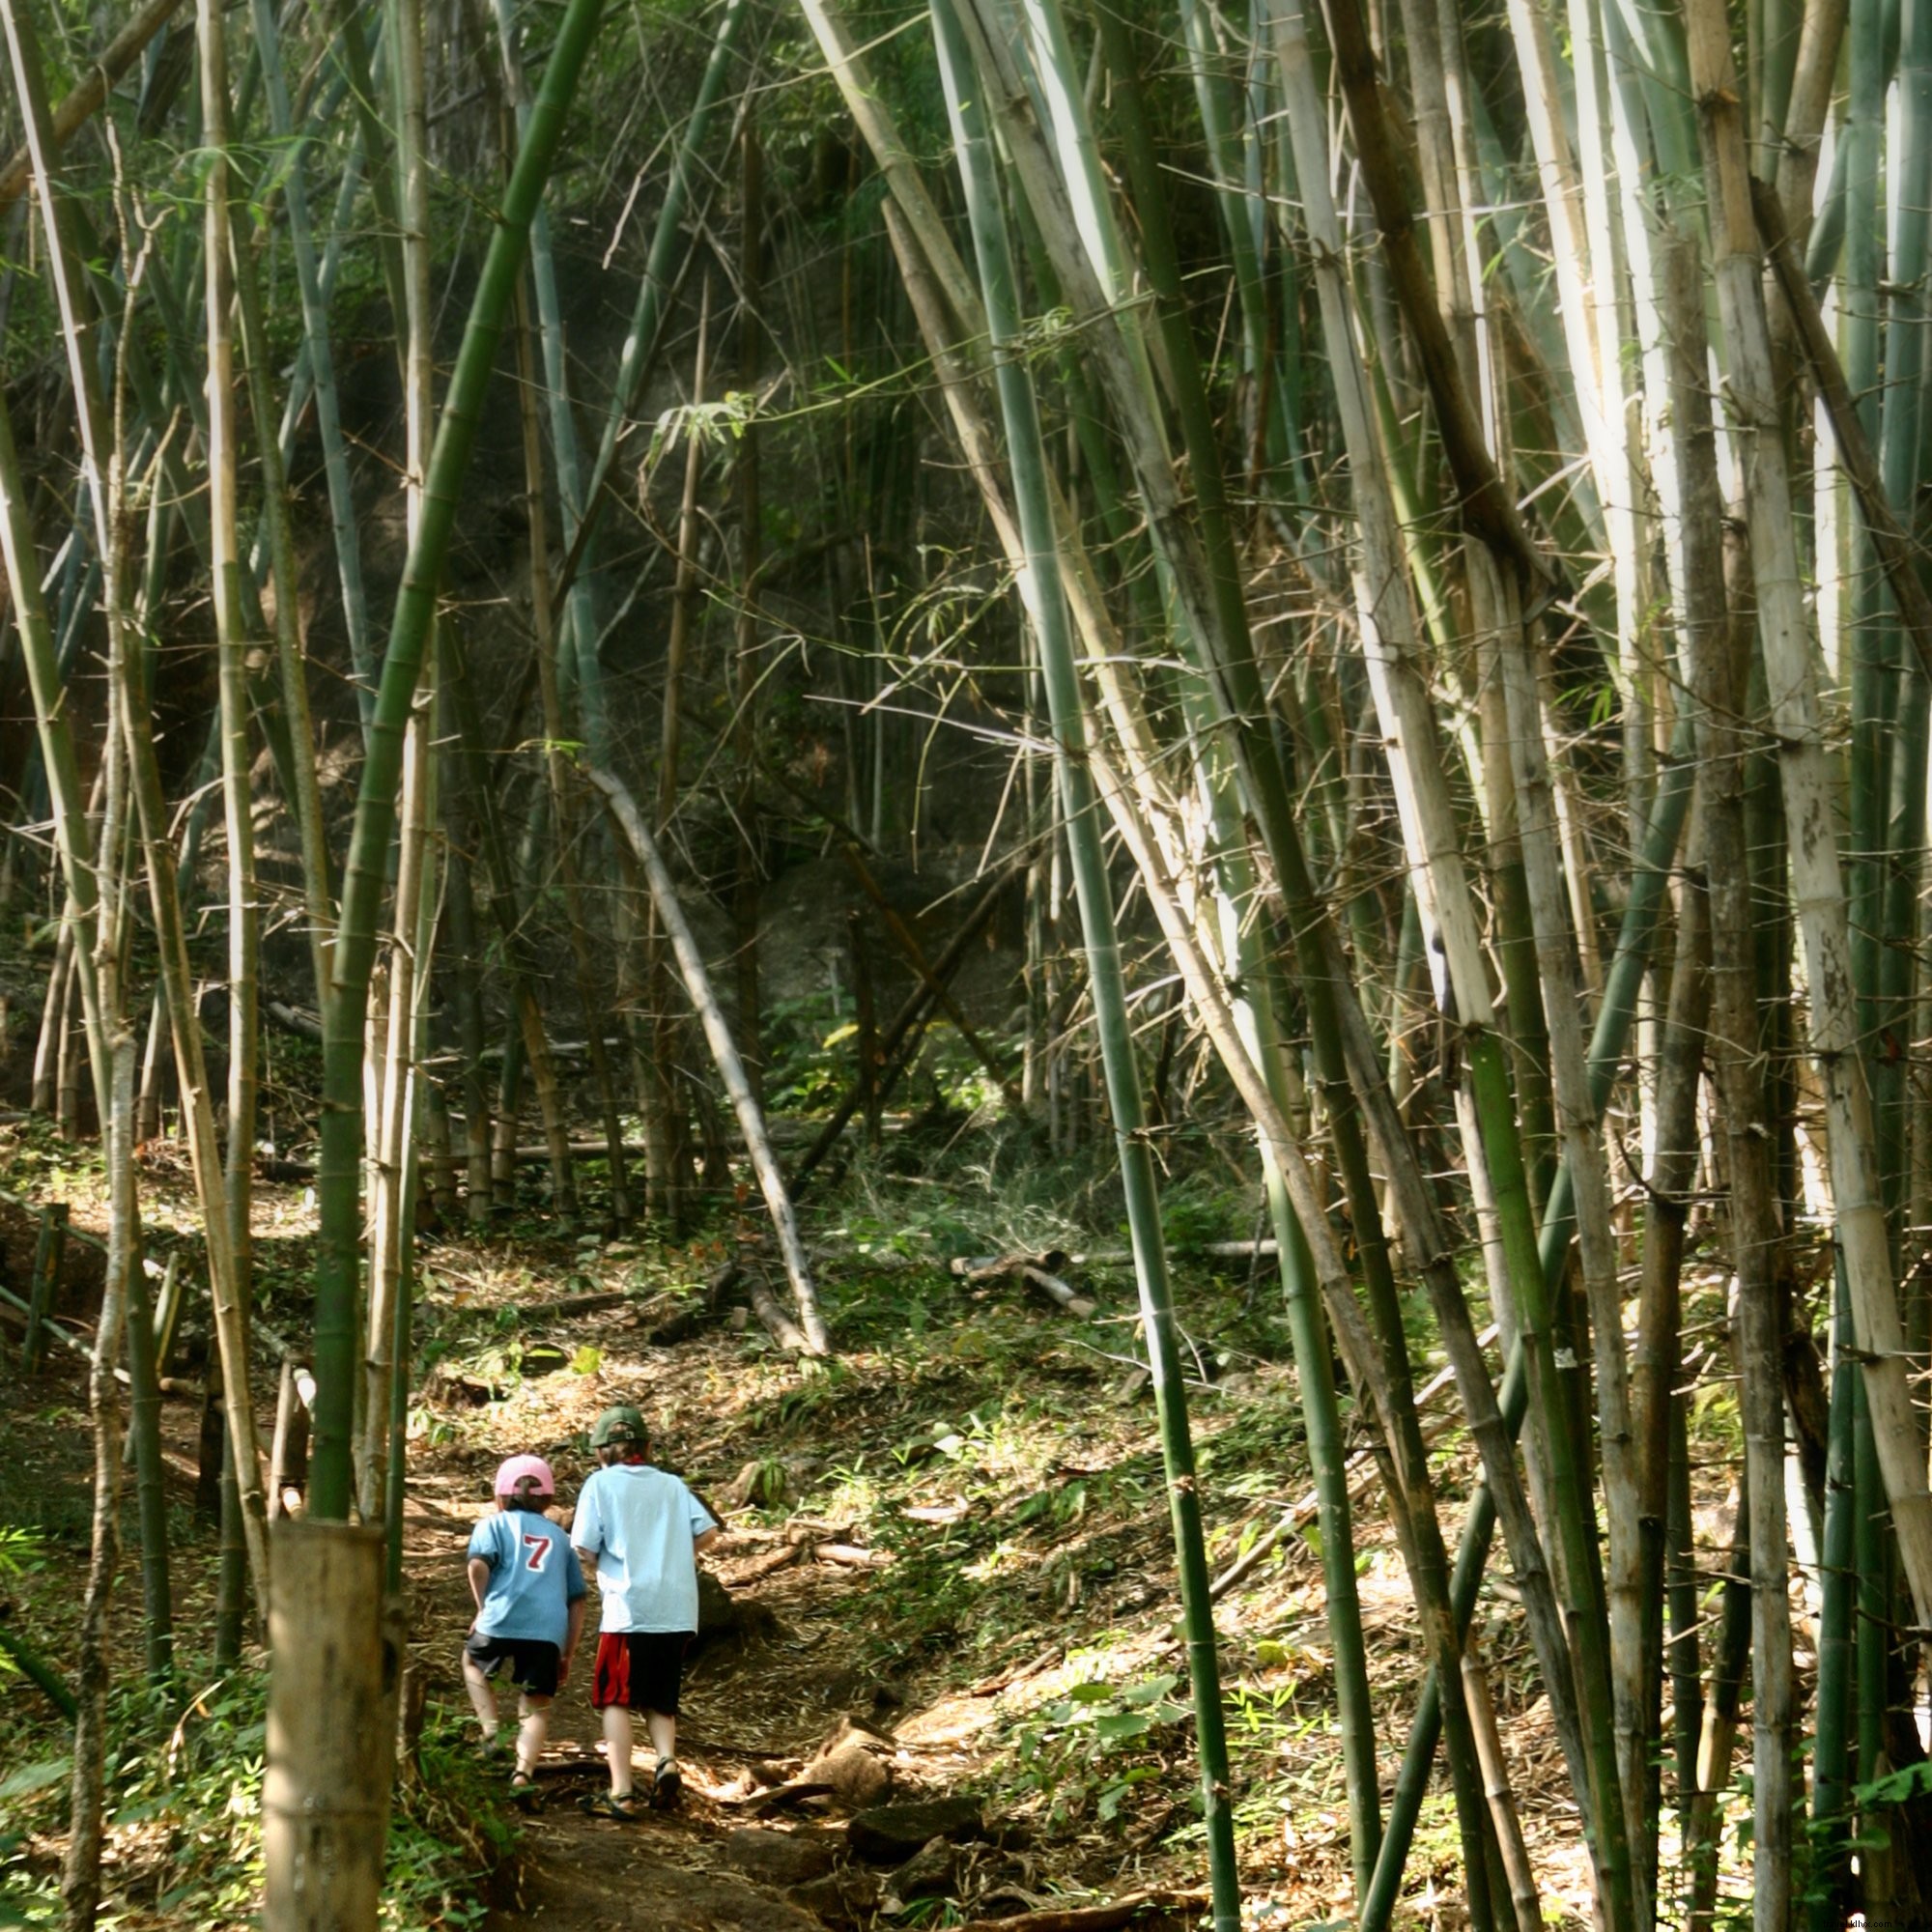 Foto Anak Laki-Laki Di Hutan Bambu